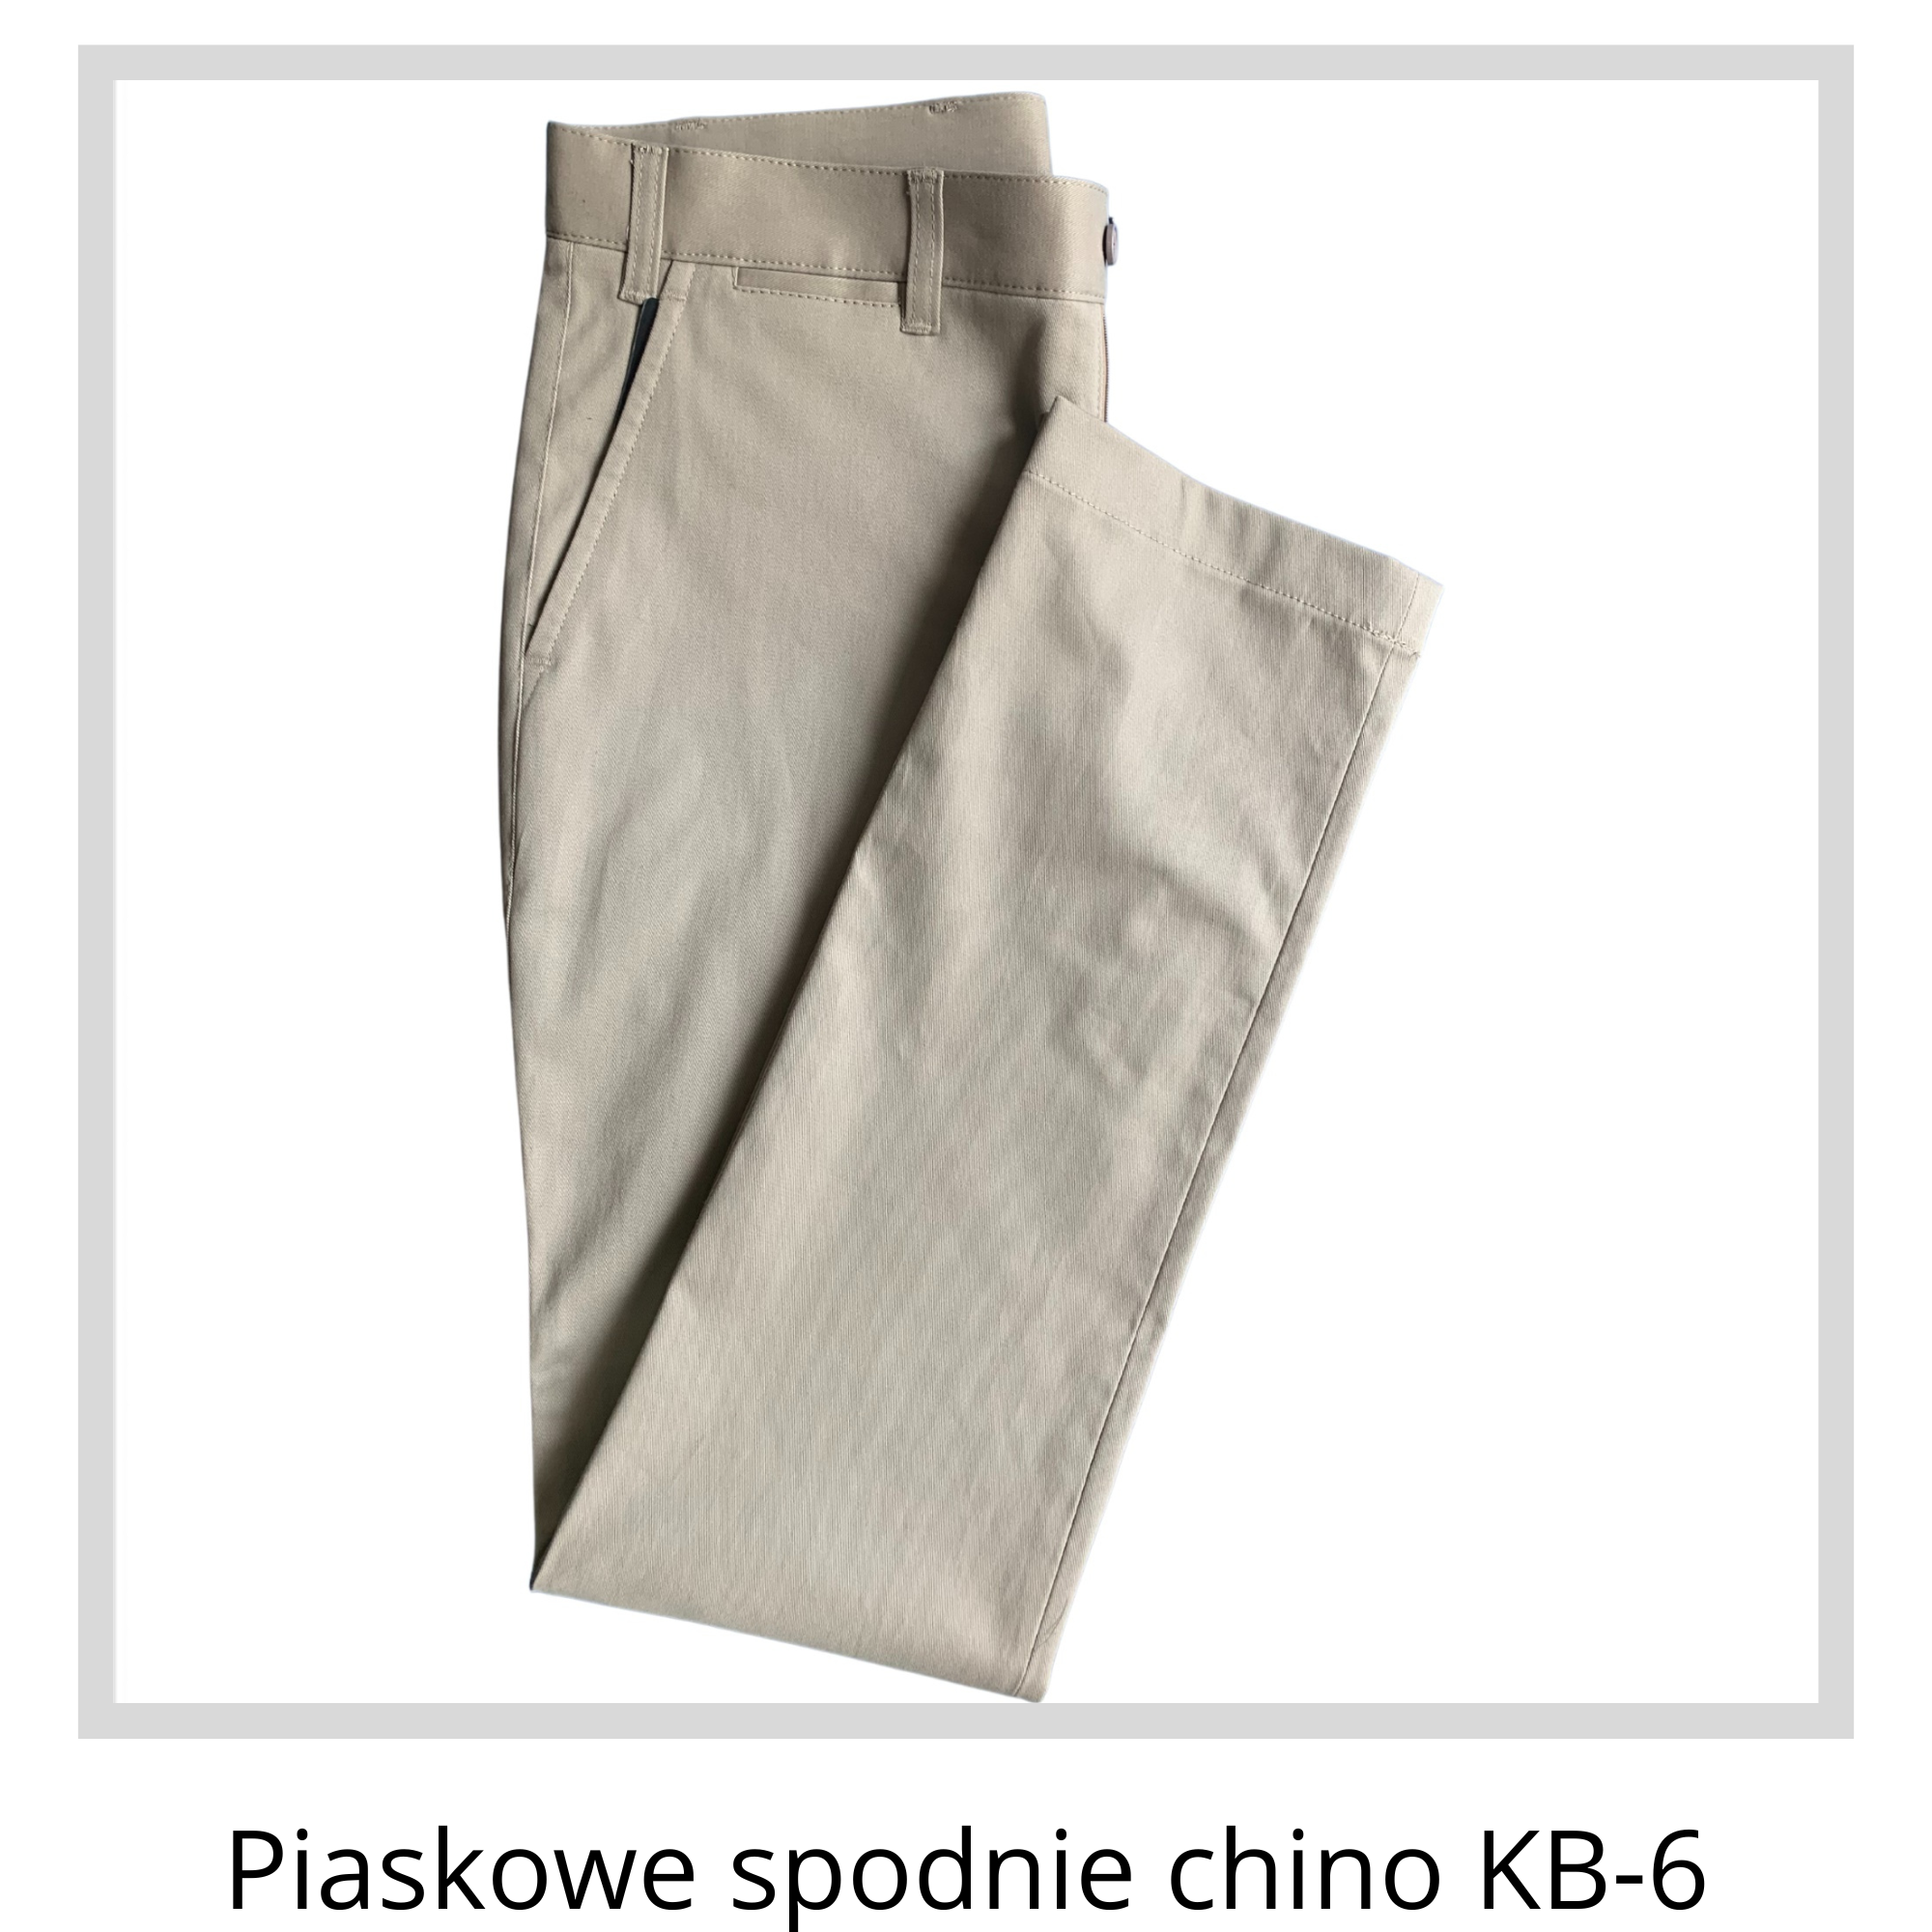 Piaskowe spodnie chino